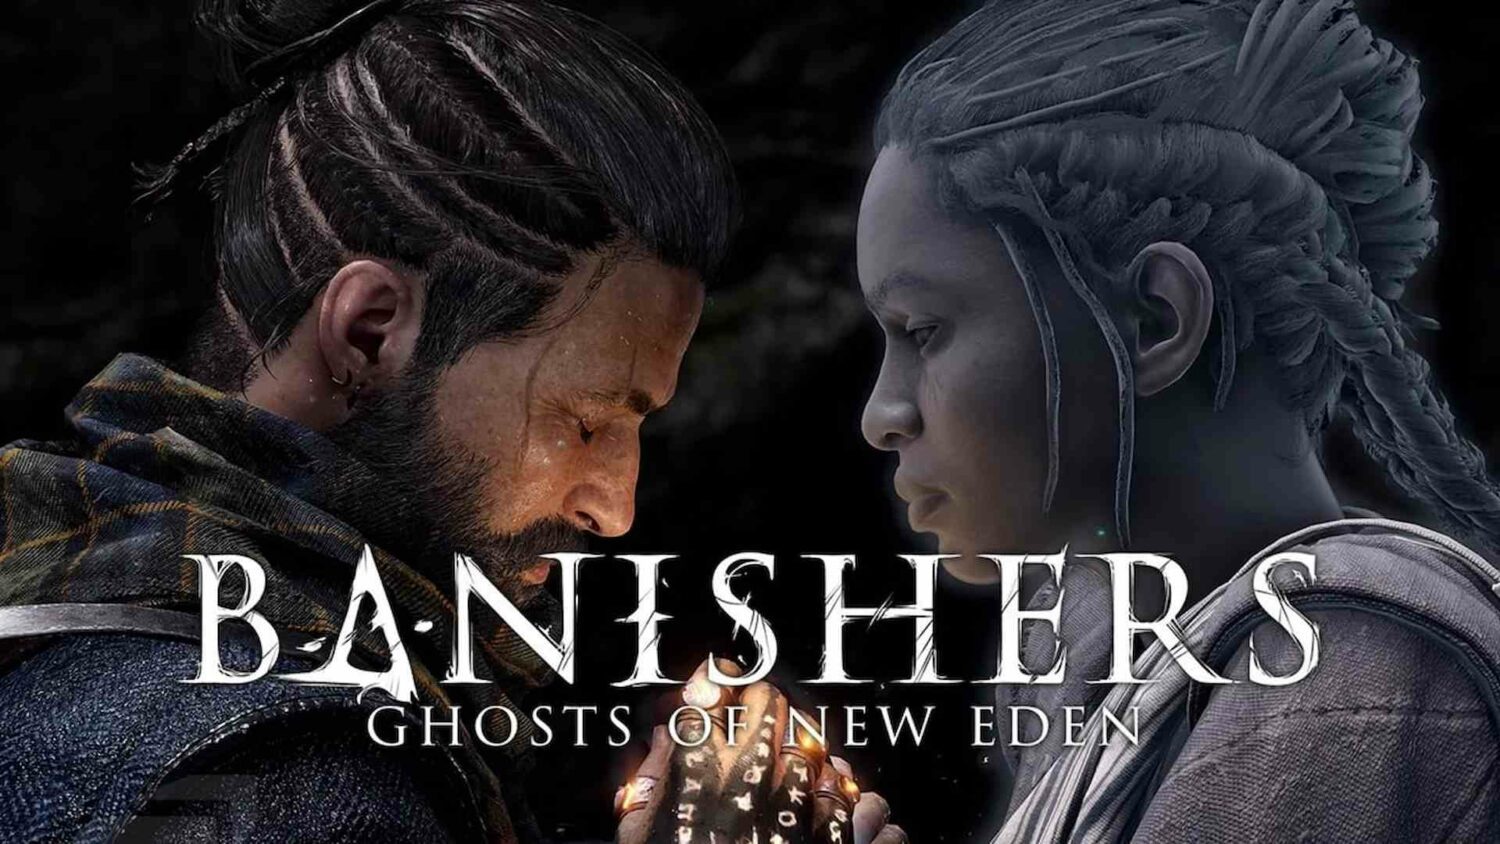 Banishers ghost of new eden